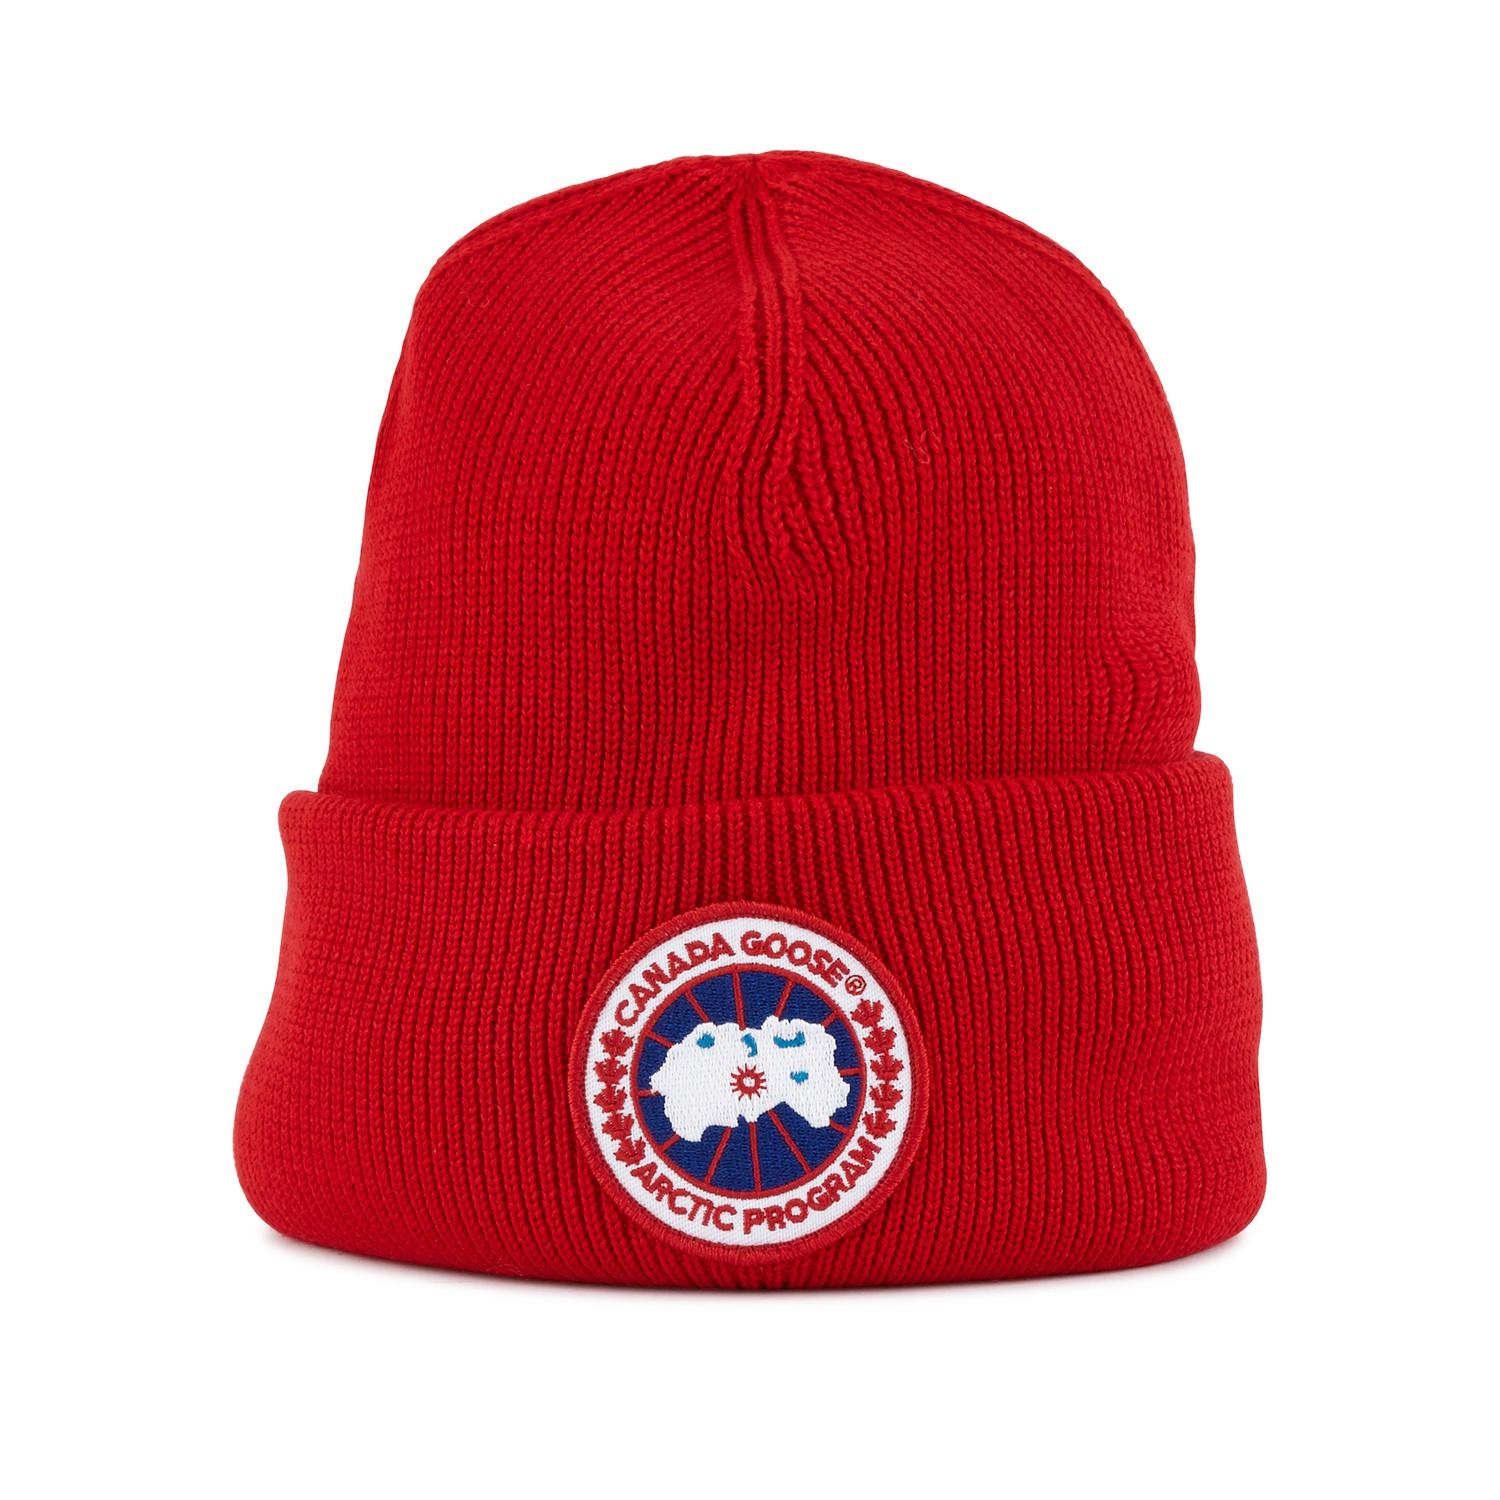 Canada Goose Goose Arctic Hat in Red for Men - Lyst